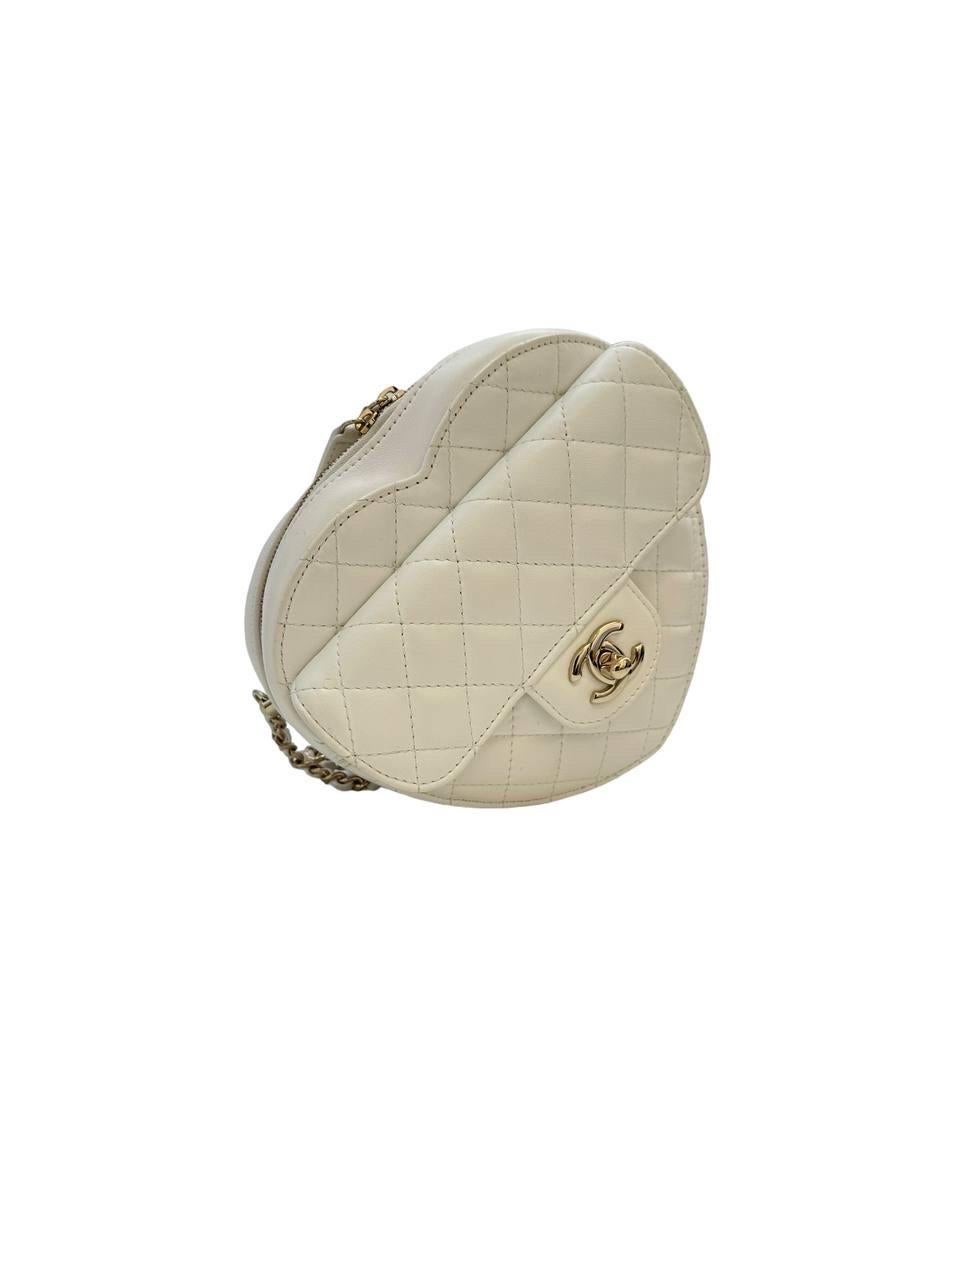 Chanel Heart Medium Bianca Borsa A Spalla  In Excellent Condition For Sale In Torre Del Greco, IT